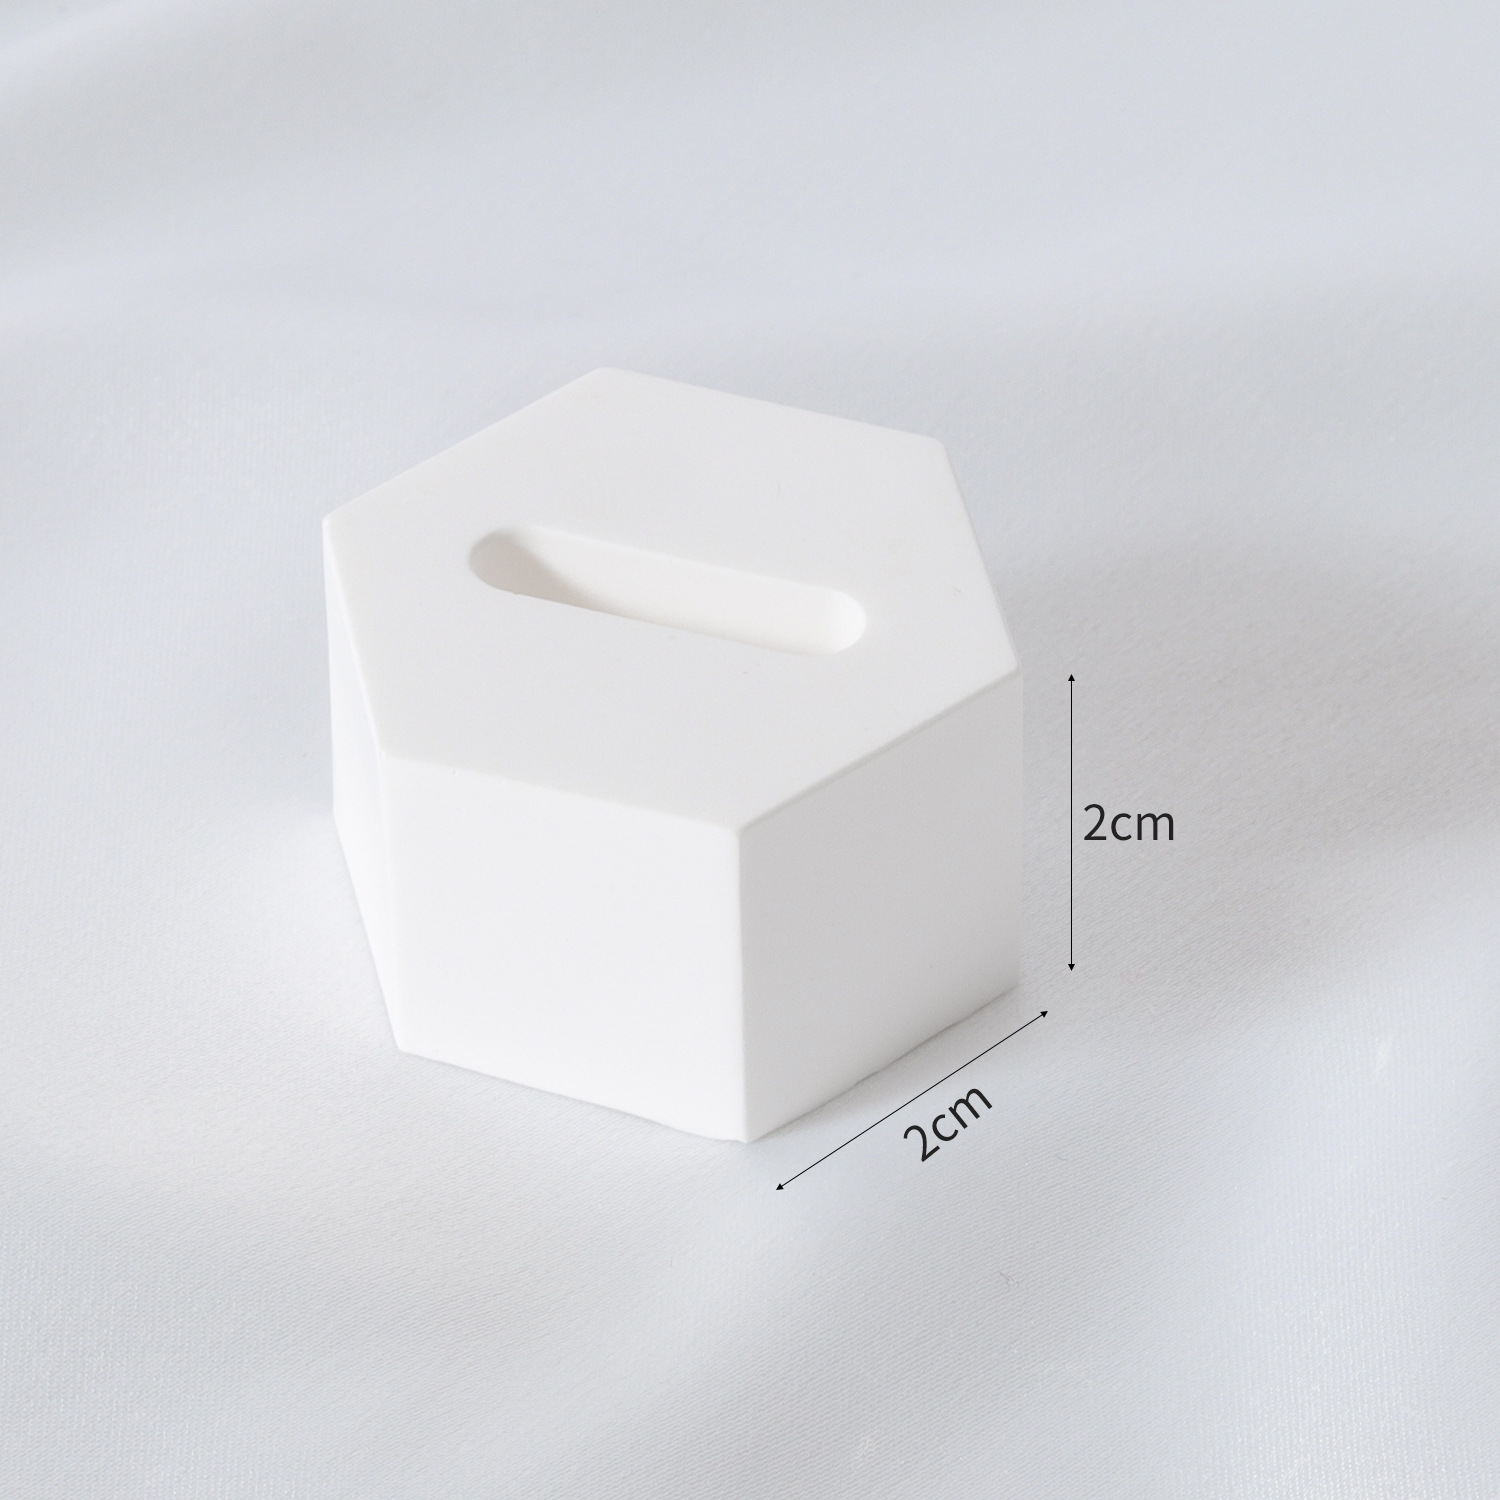 1:Small ring holder